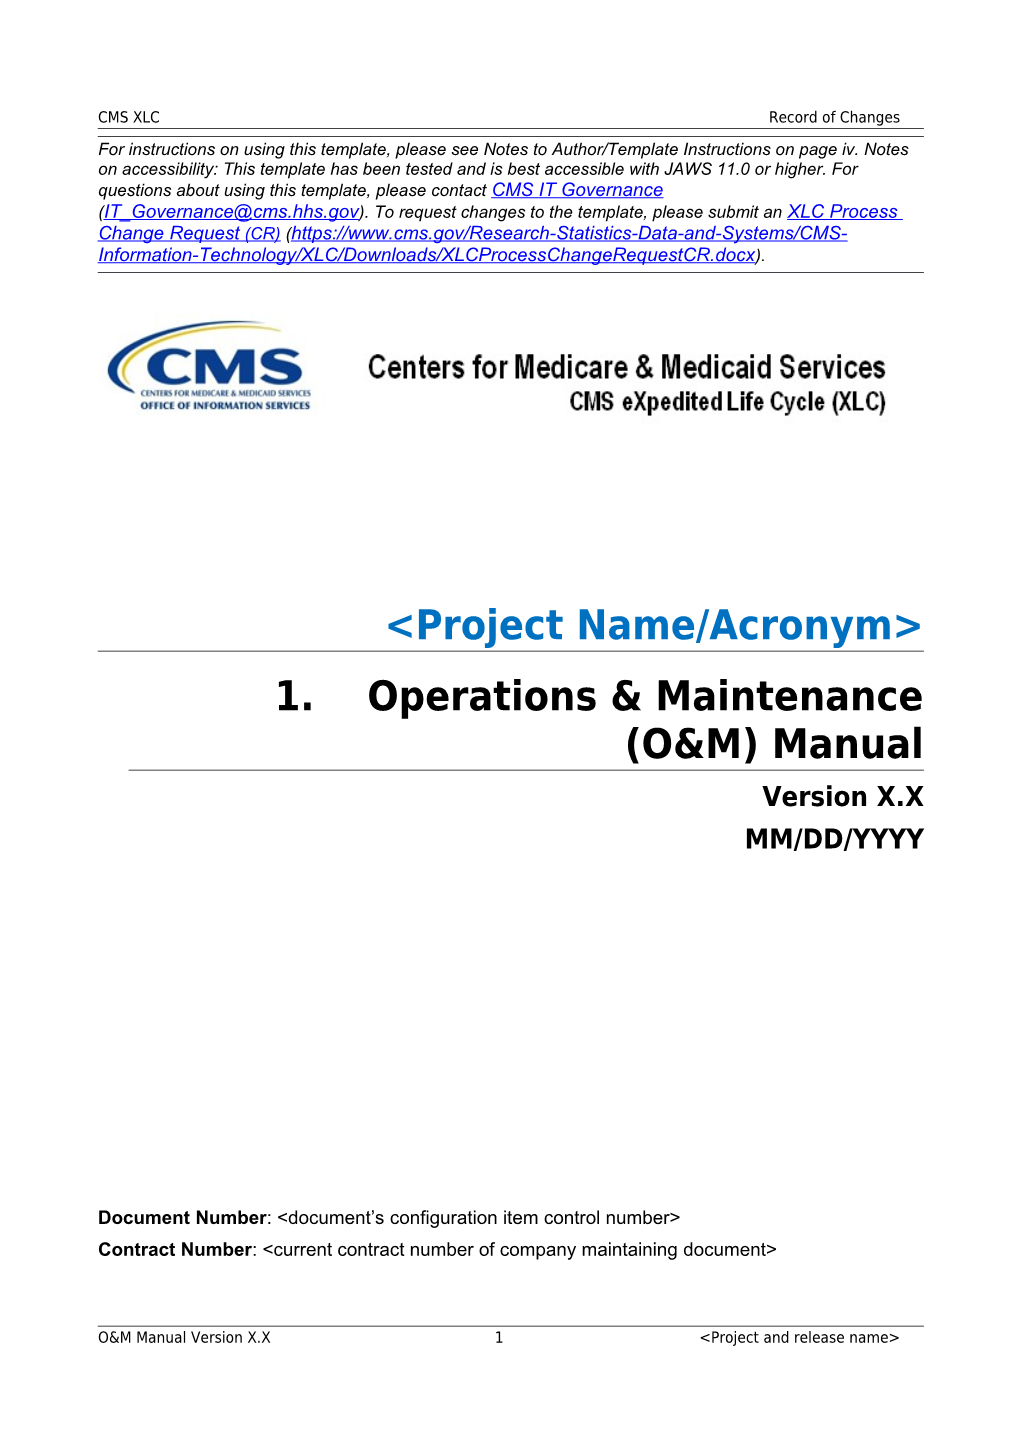 Operations & Maintenance Manual (O&M Manual) Template s1